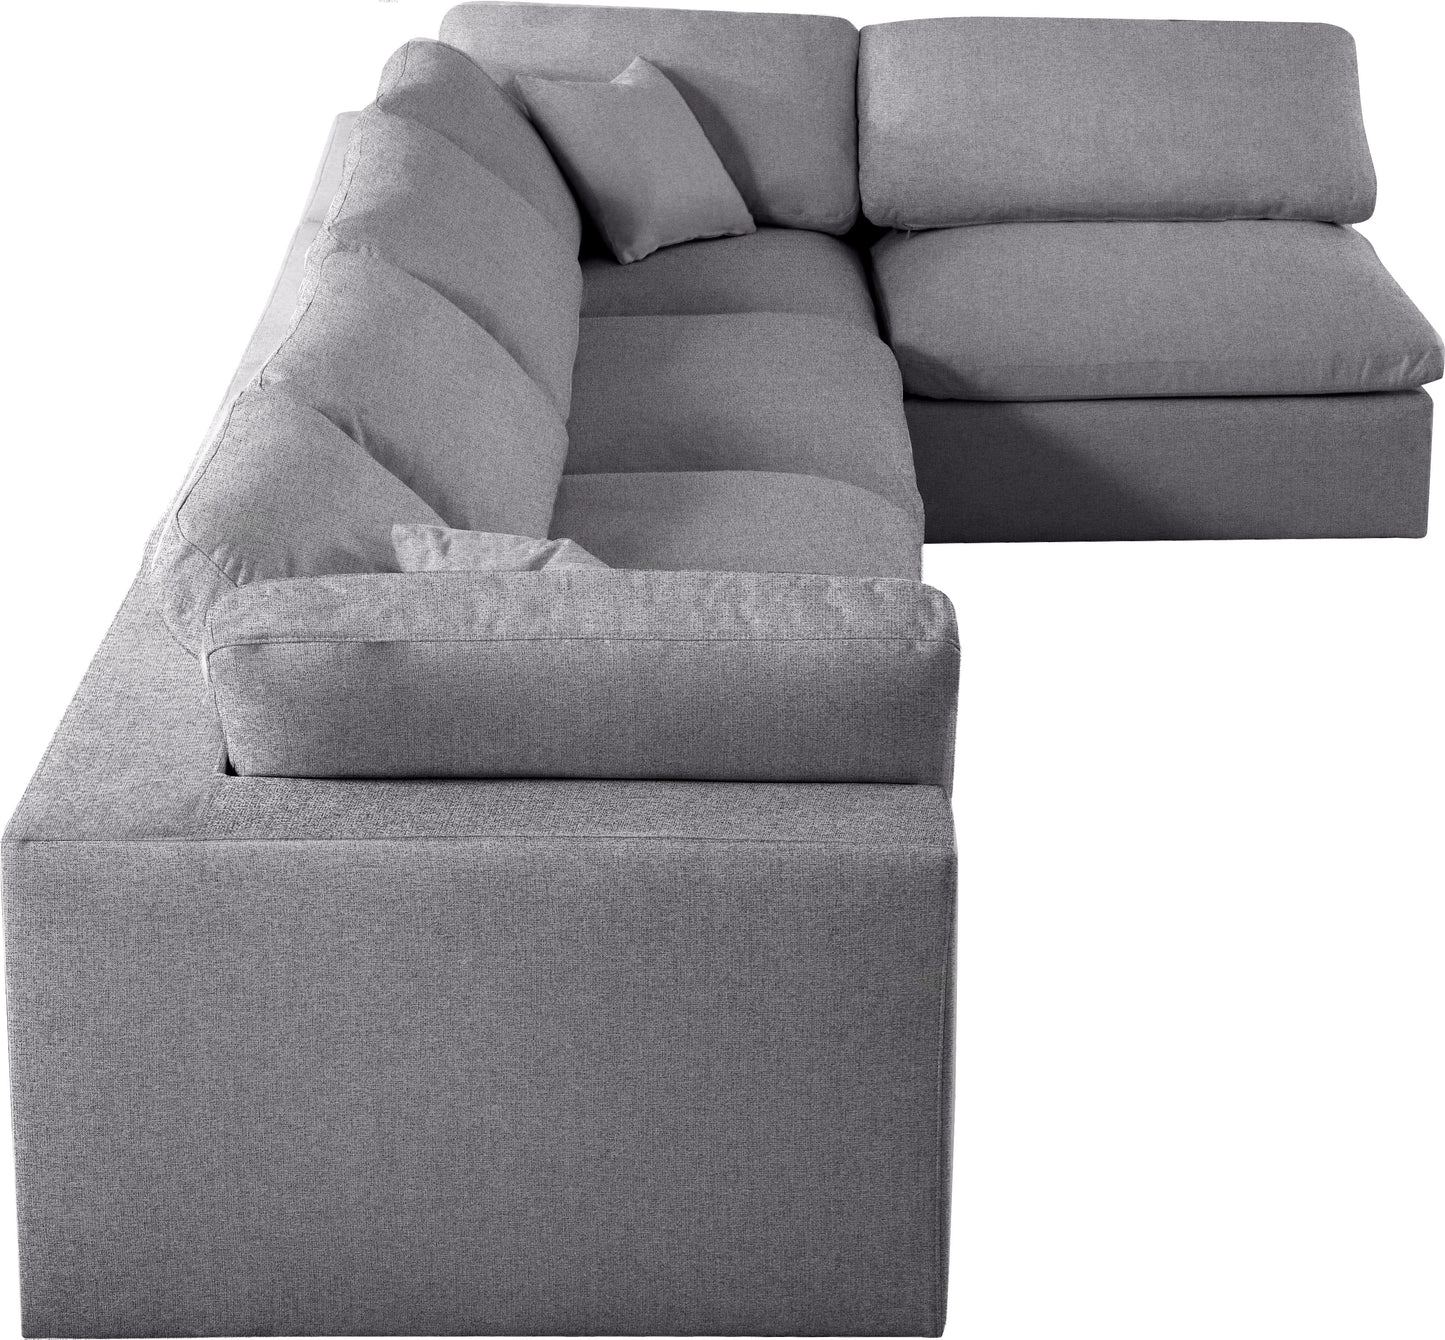 damian grey linen textured fabric deluxe comfort modular sectional sec5d